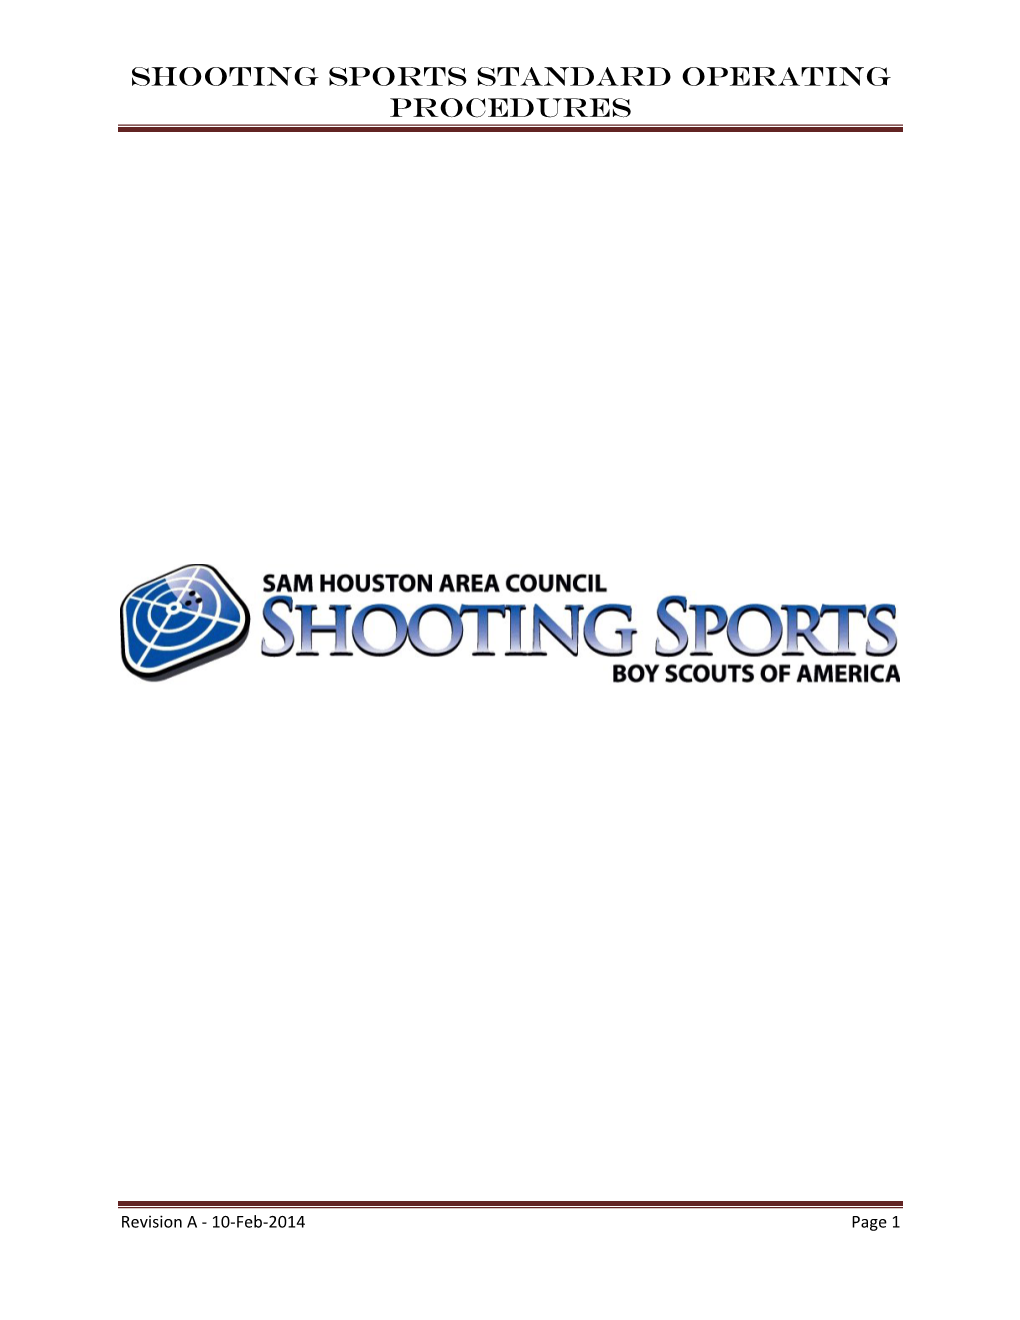 Shooting Sports Standard Operating Procedures